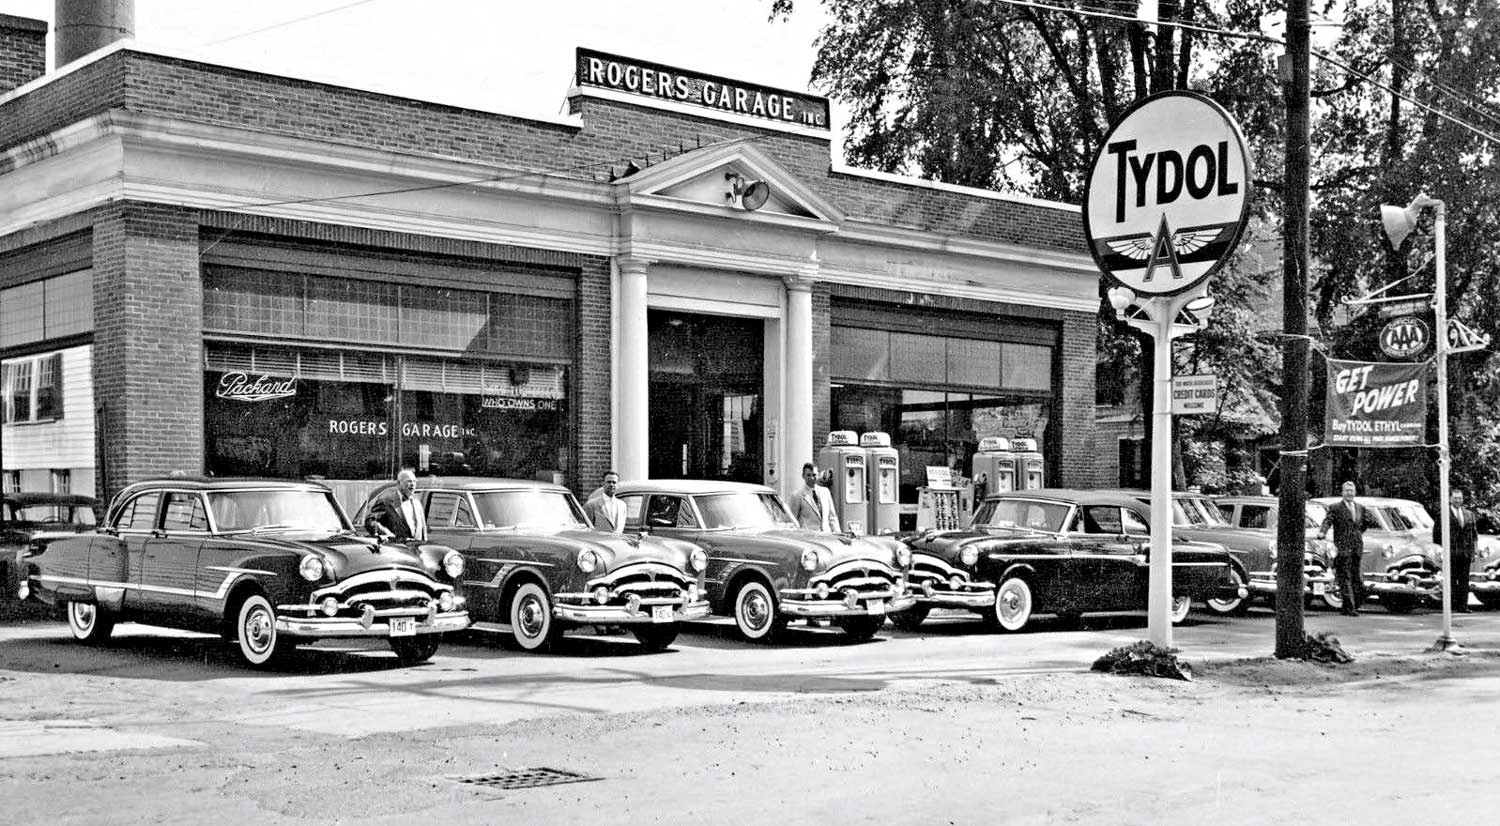 Rogers-Garage-Inc.-Packard-Sales-and-Service-Circa-1953.jpg